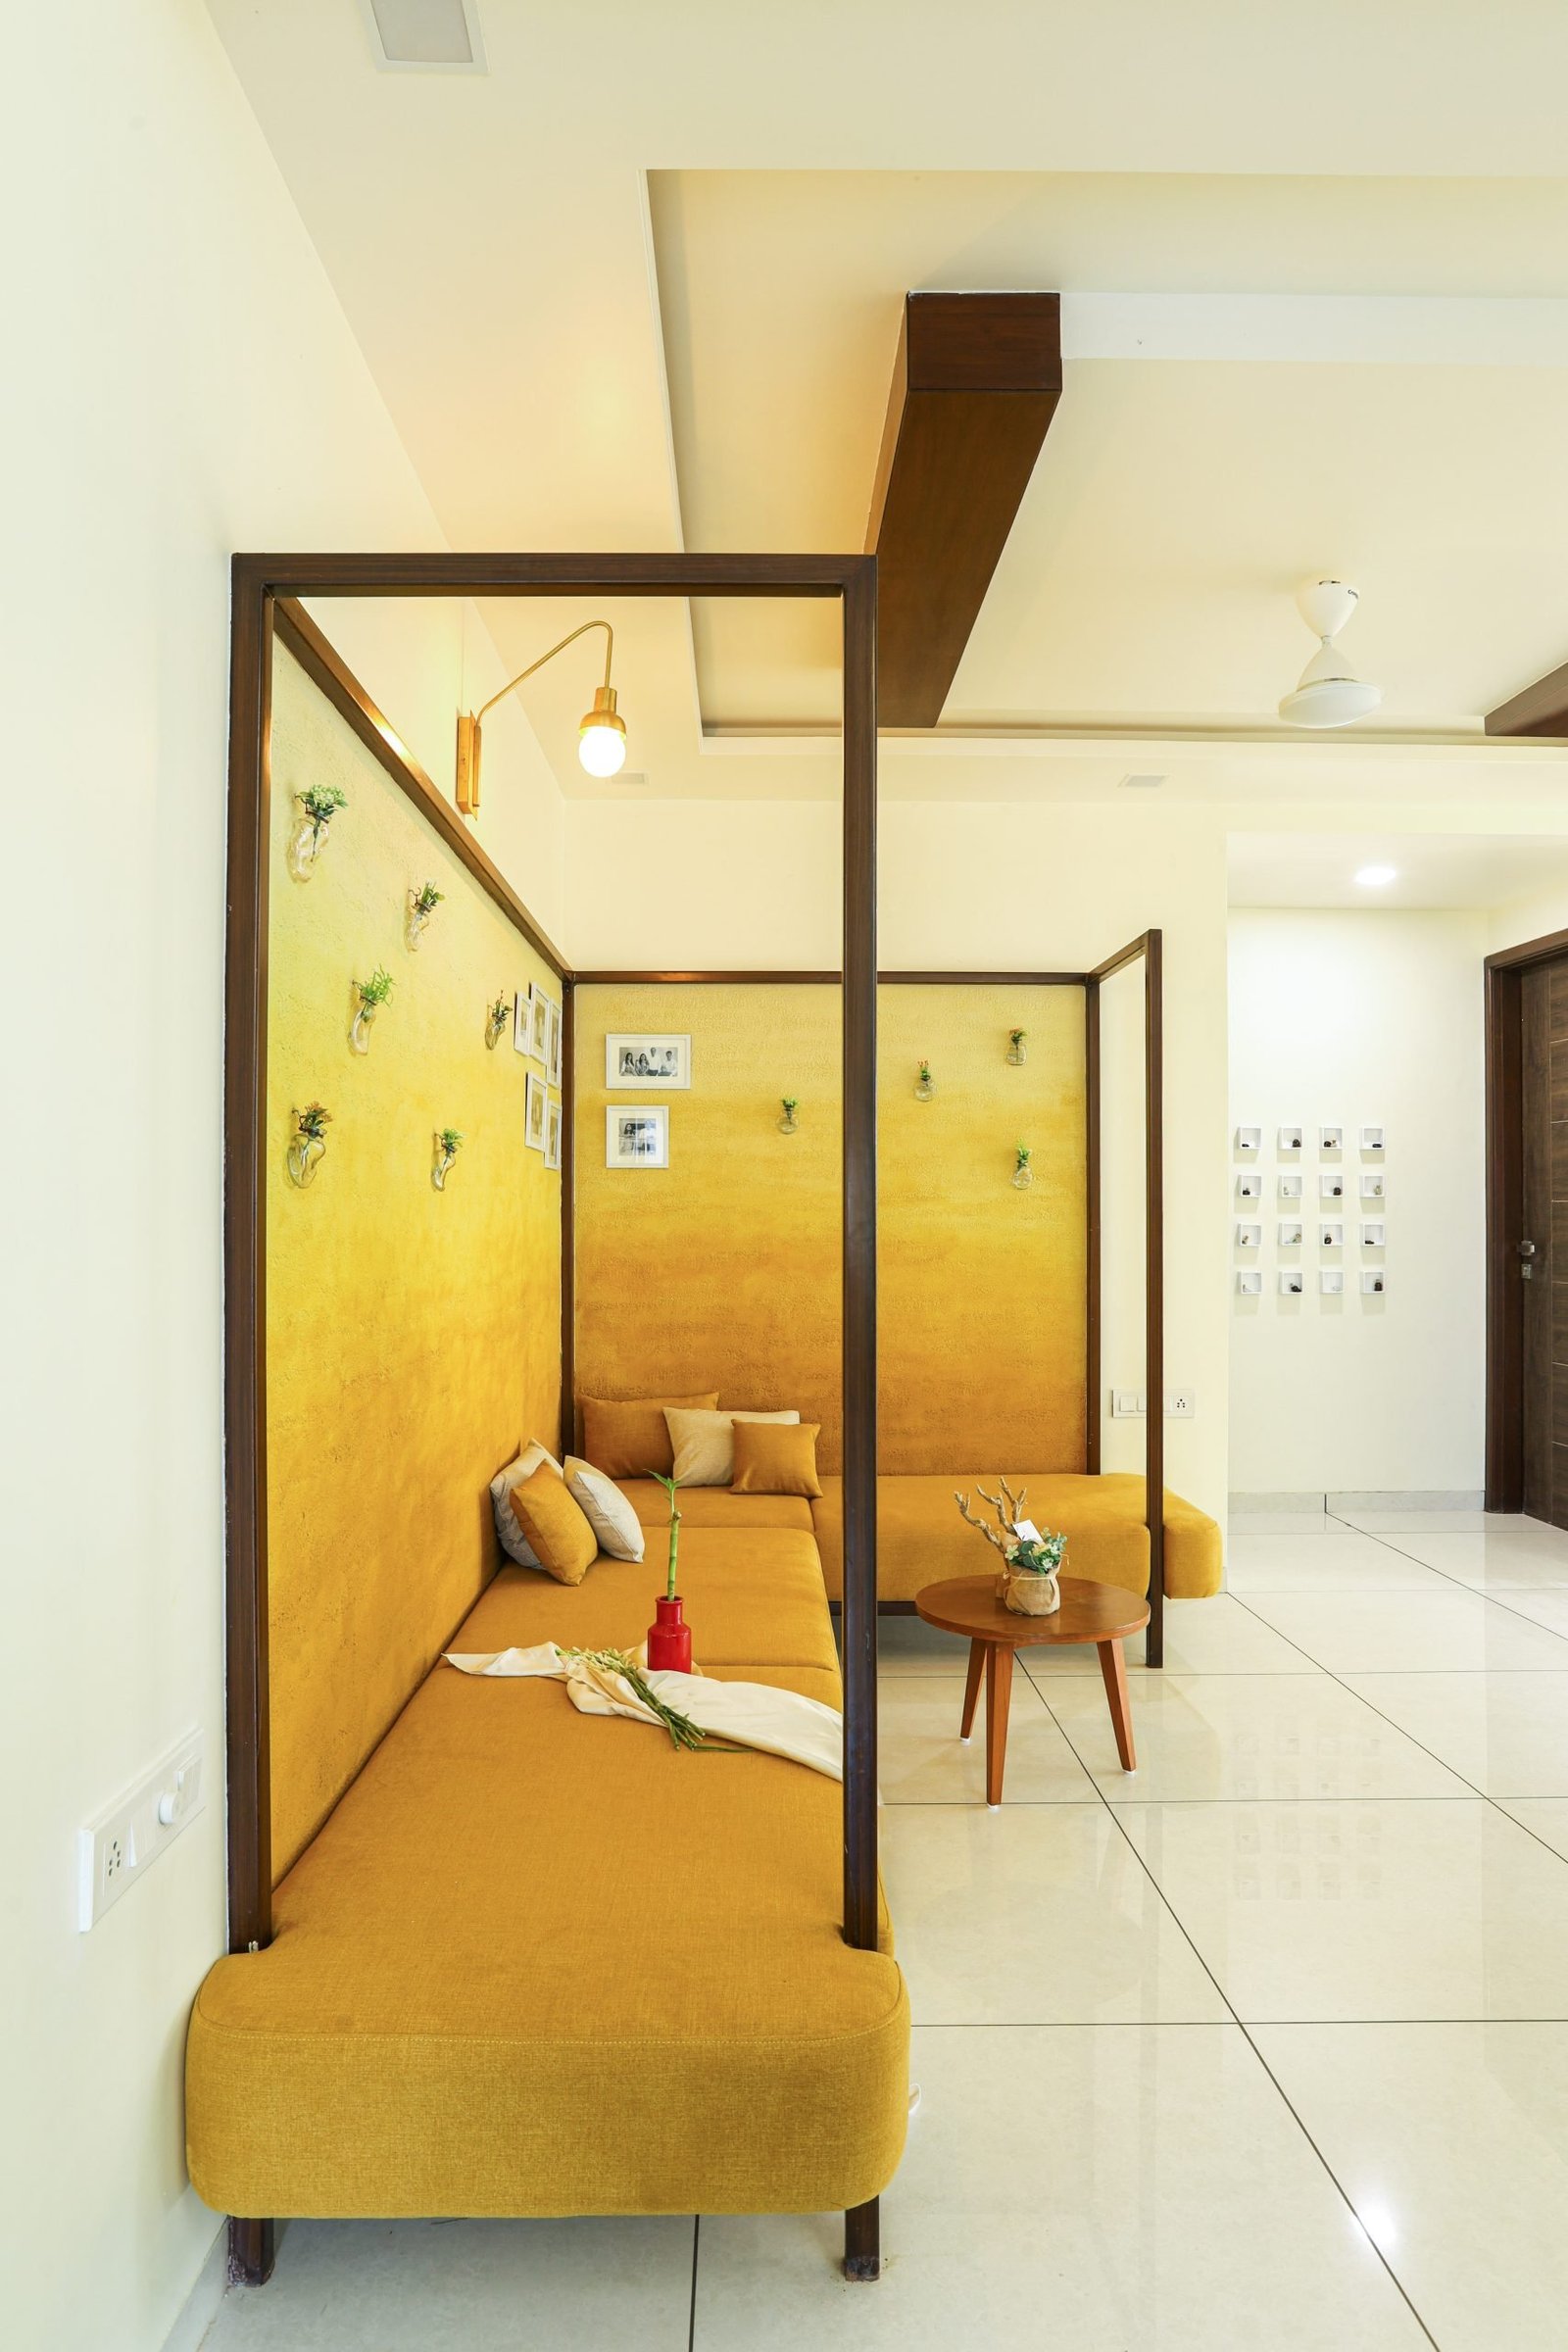 prajapati house - rated #1 interior designer ps design therapy